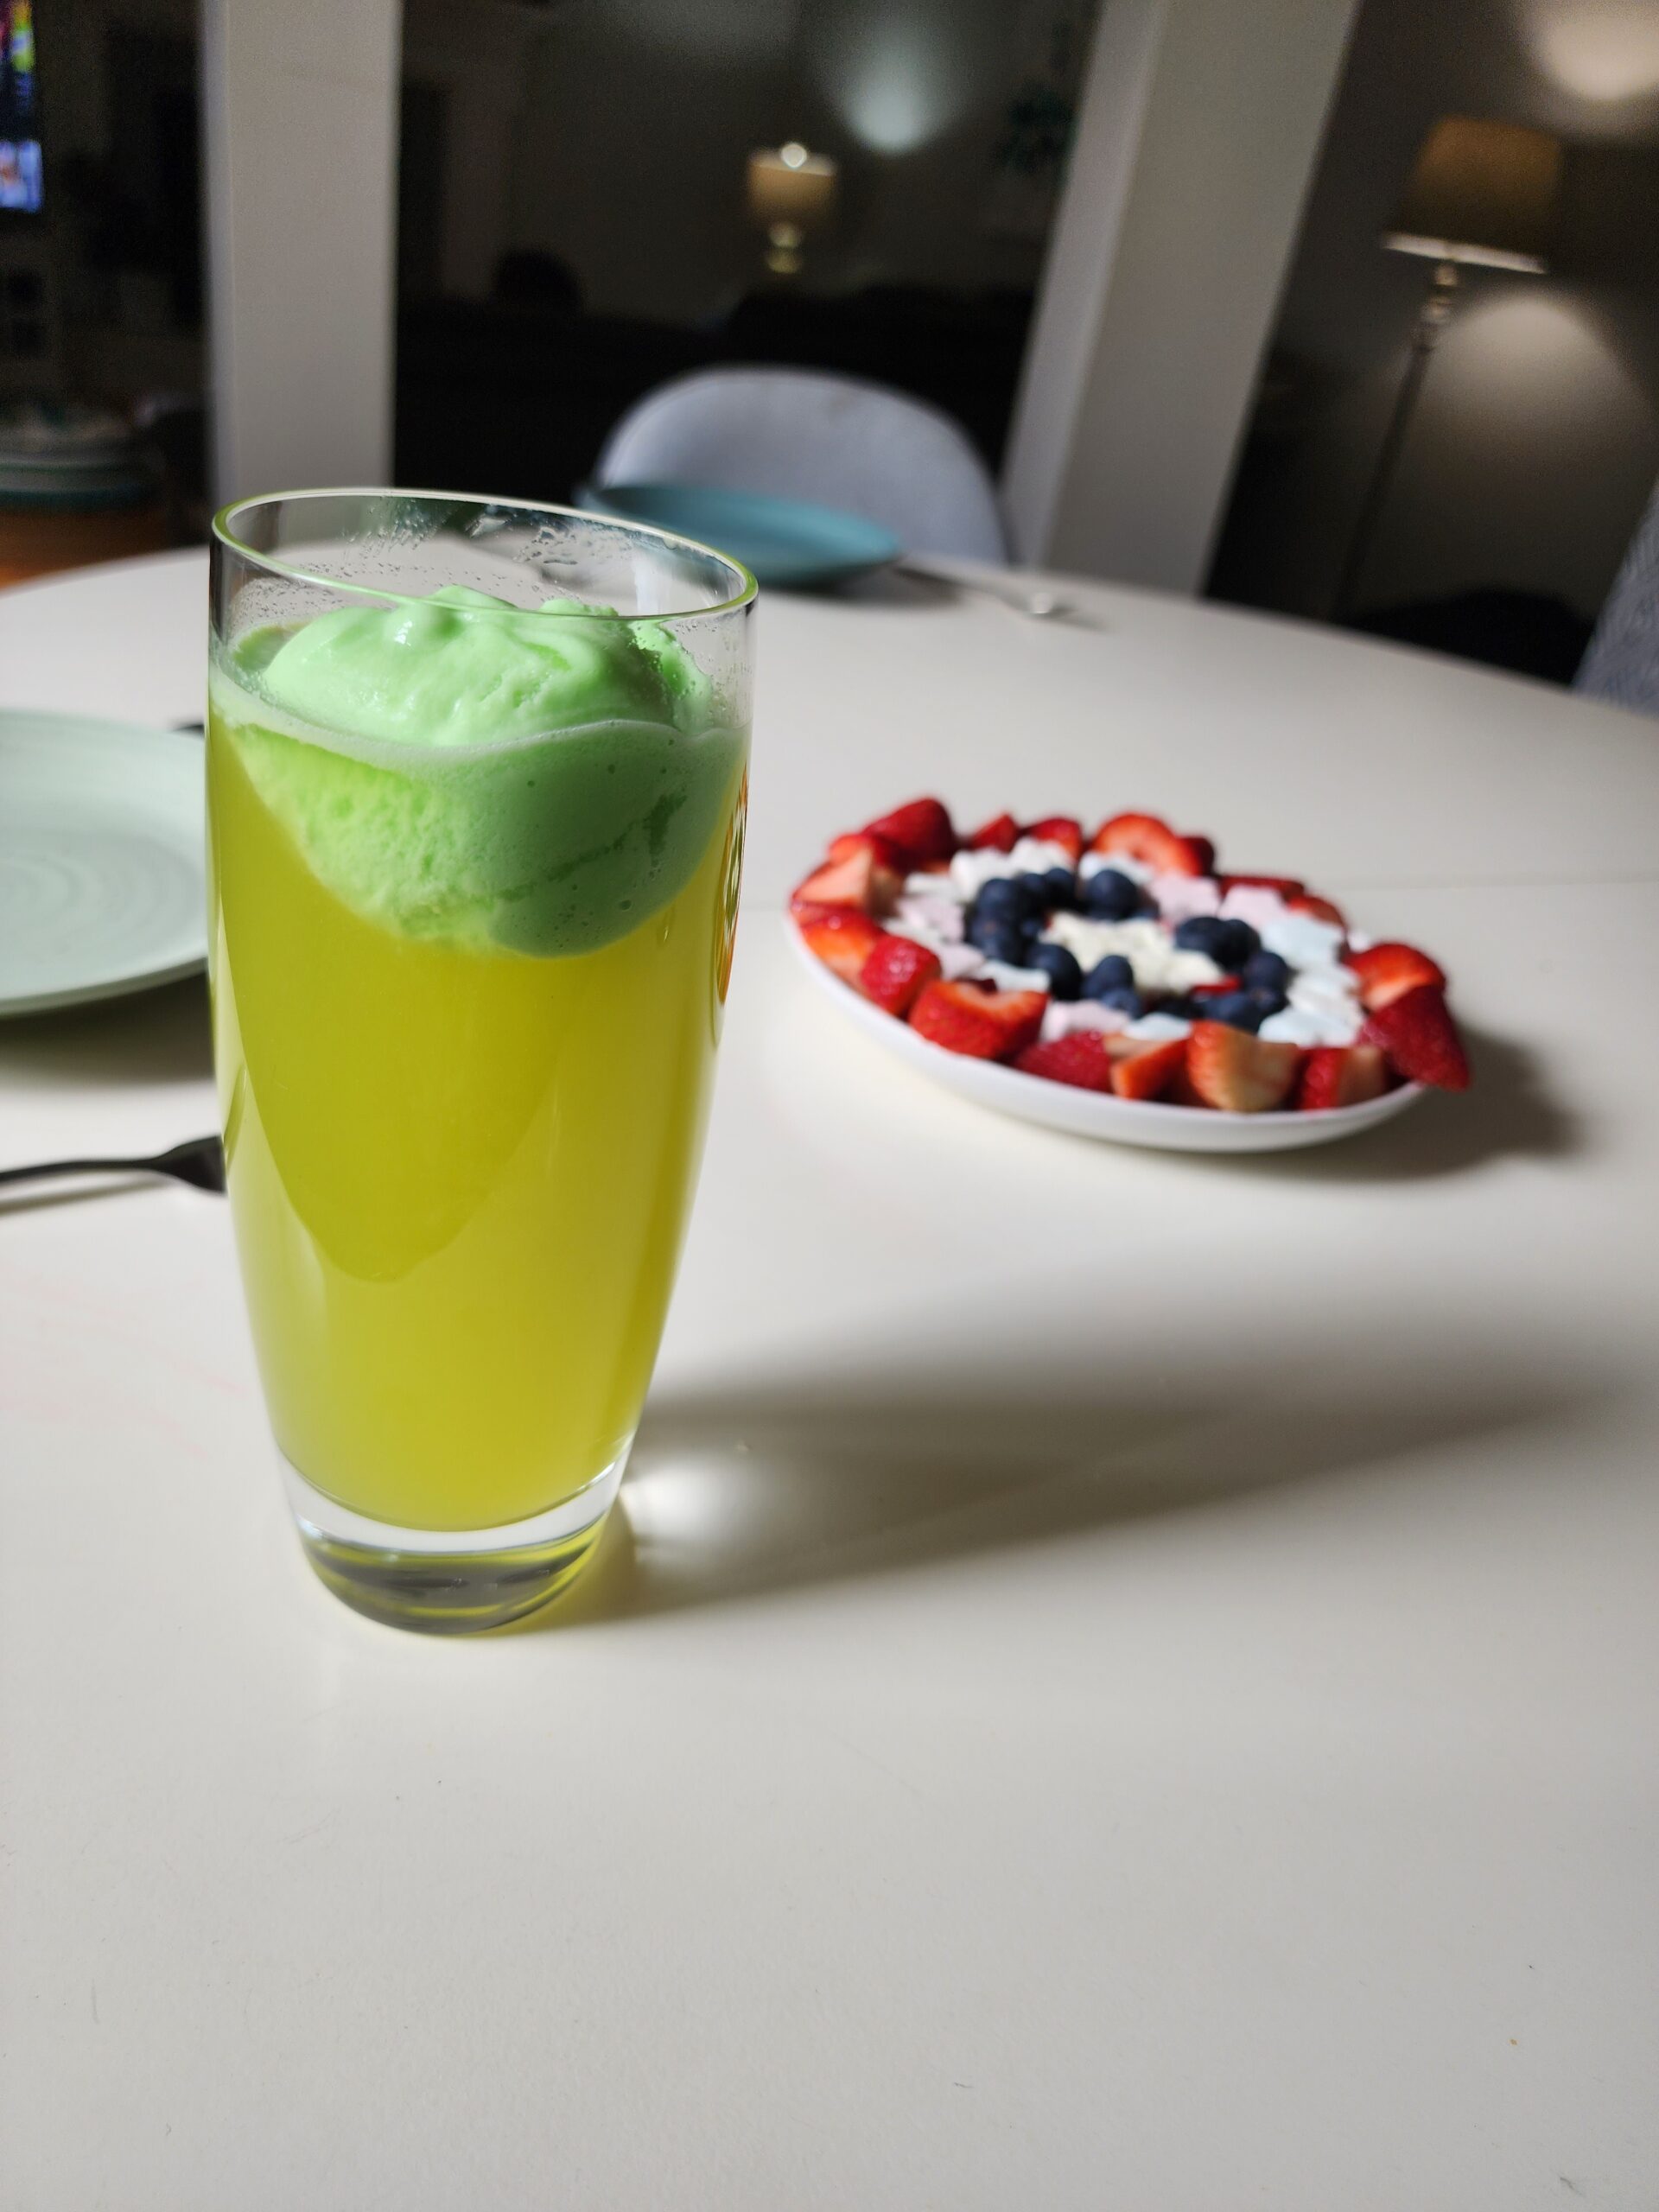 Hulk smash green drink